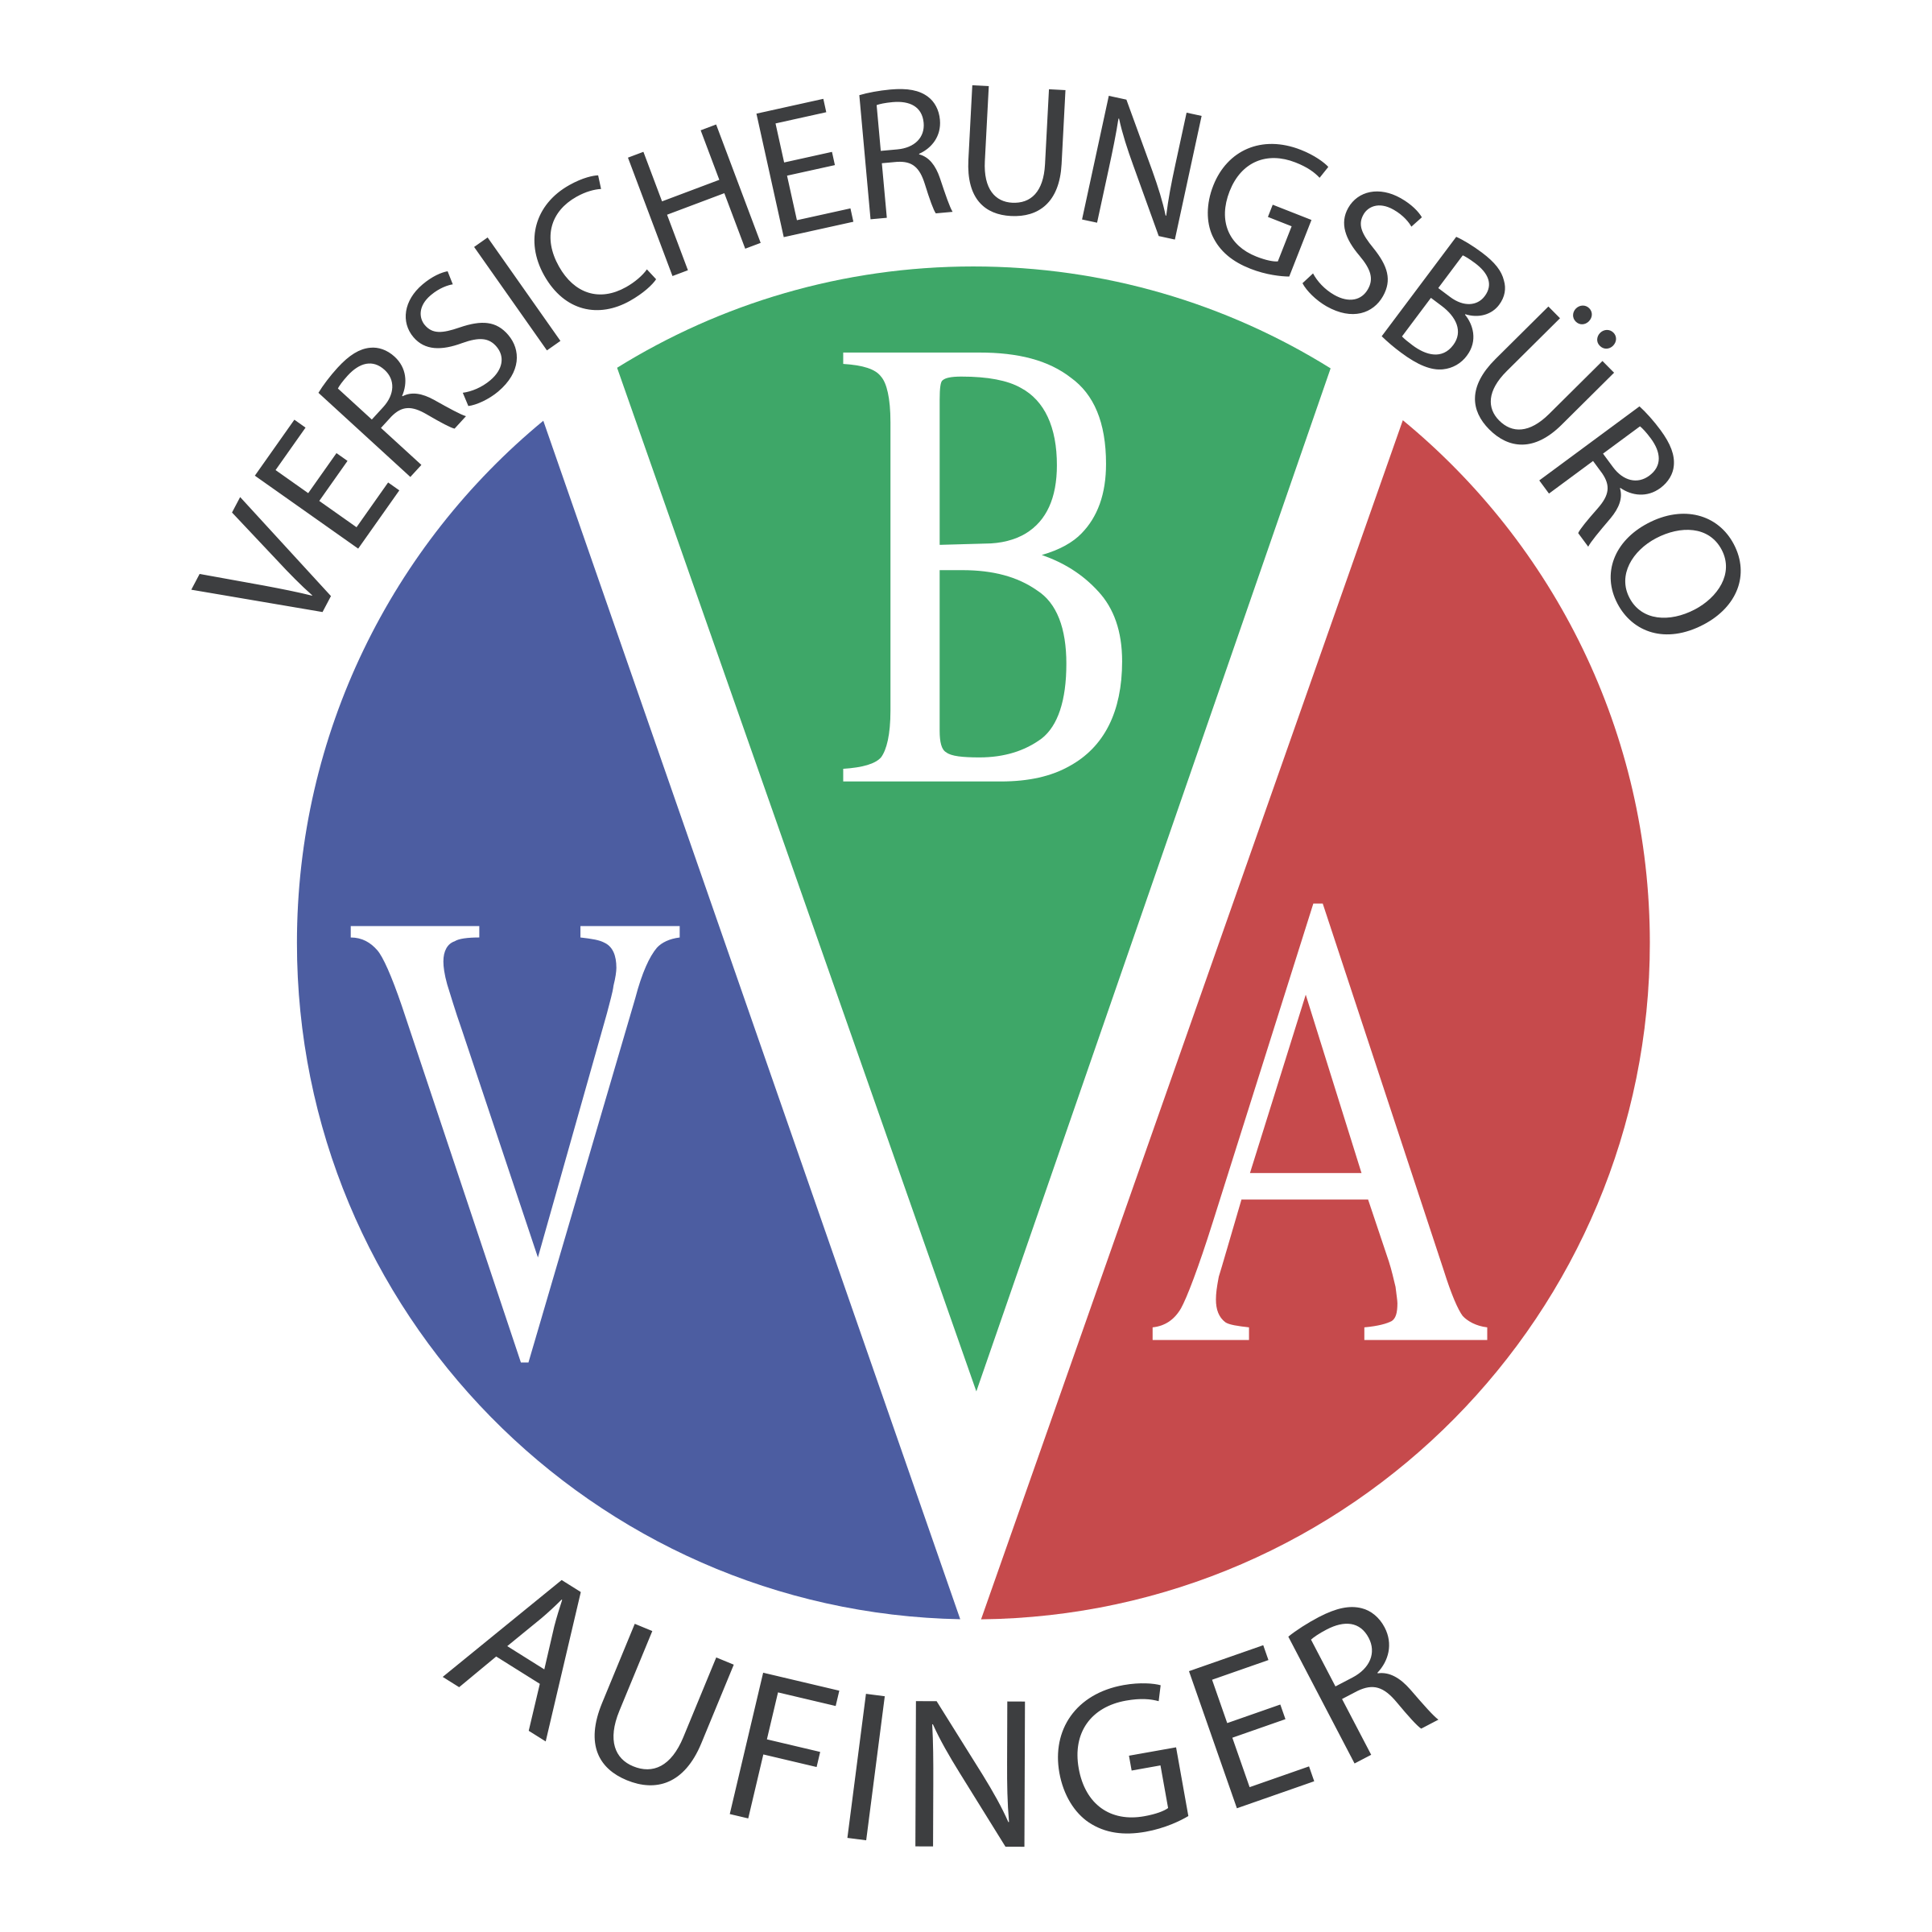 VBA Logo - VBA Logo PNG Transparent & SVG Vector - Freebie Supply